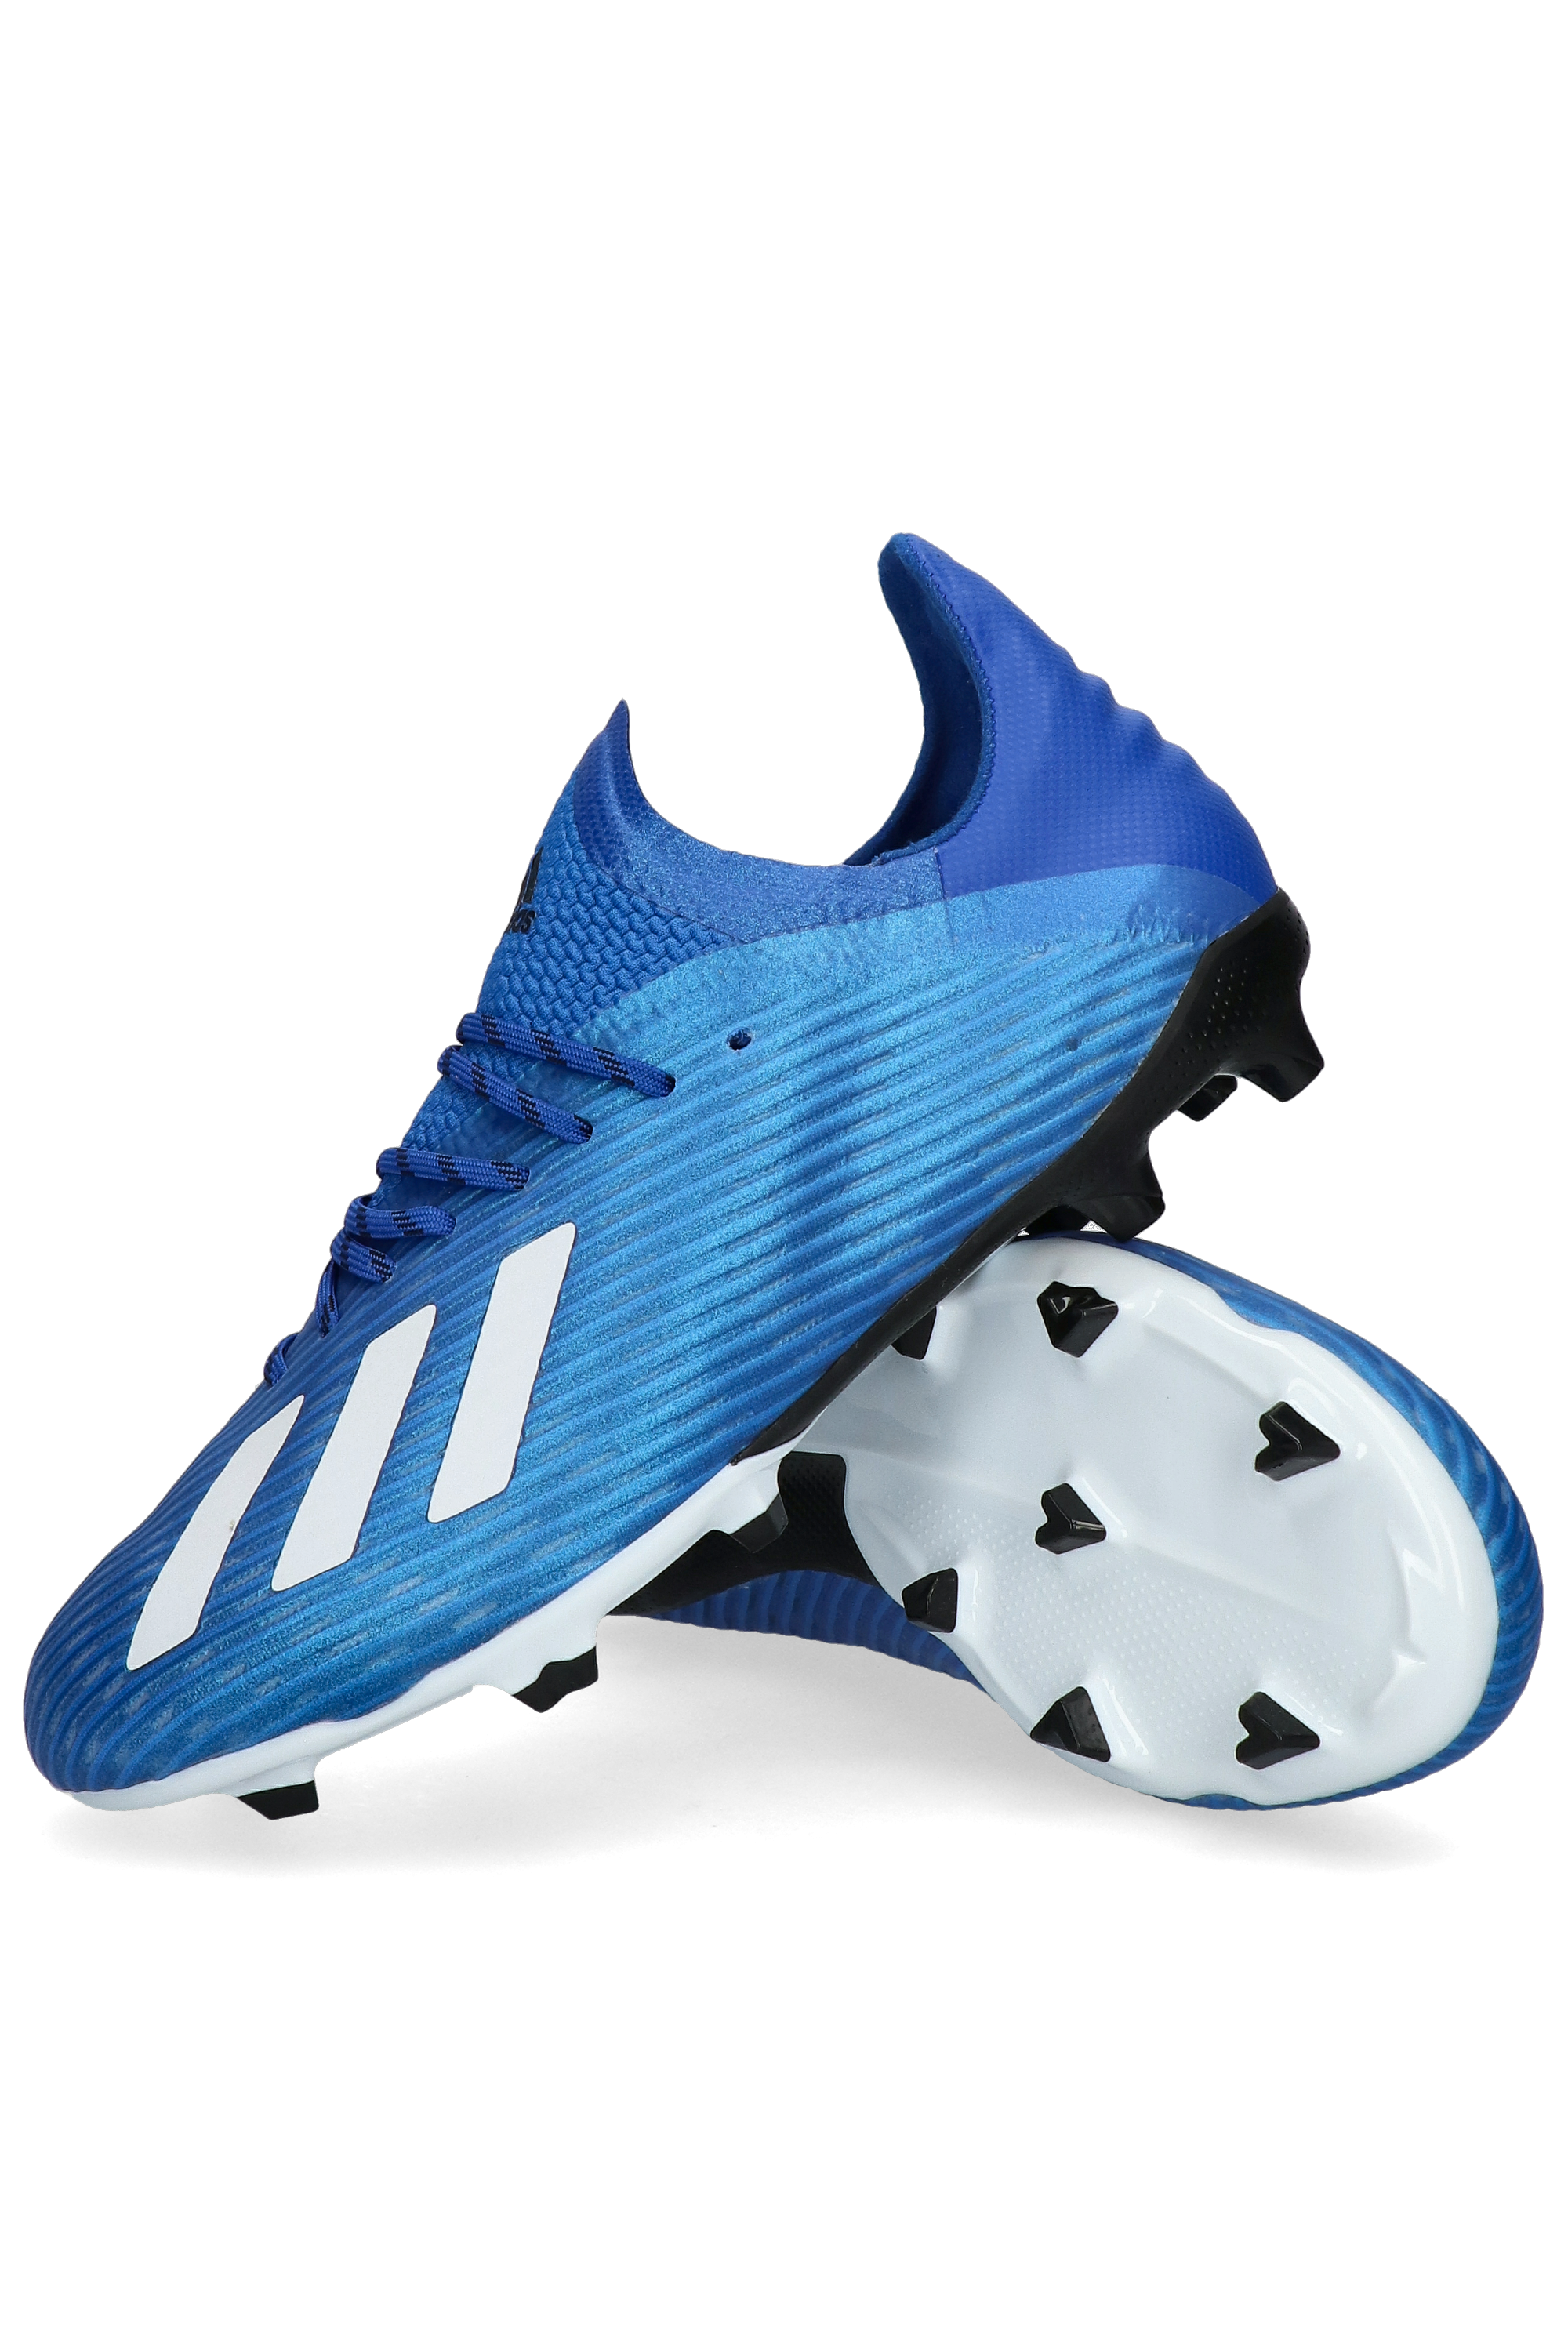 adidas 19.1 FG Firm Ground Boots Junior | R-GOL.com - Football boots &